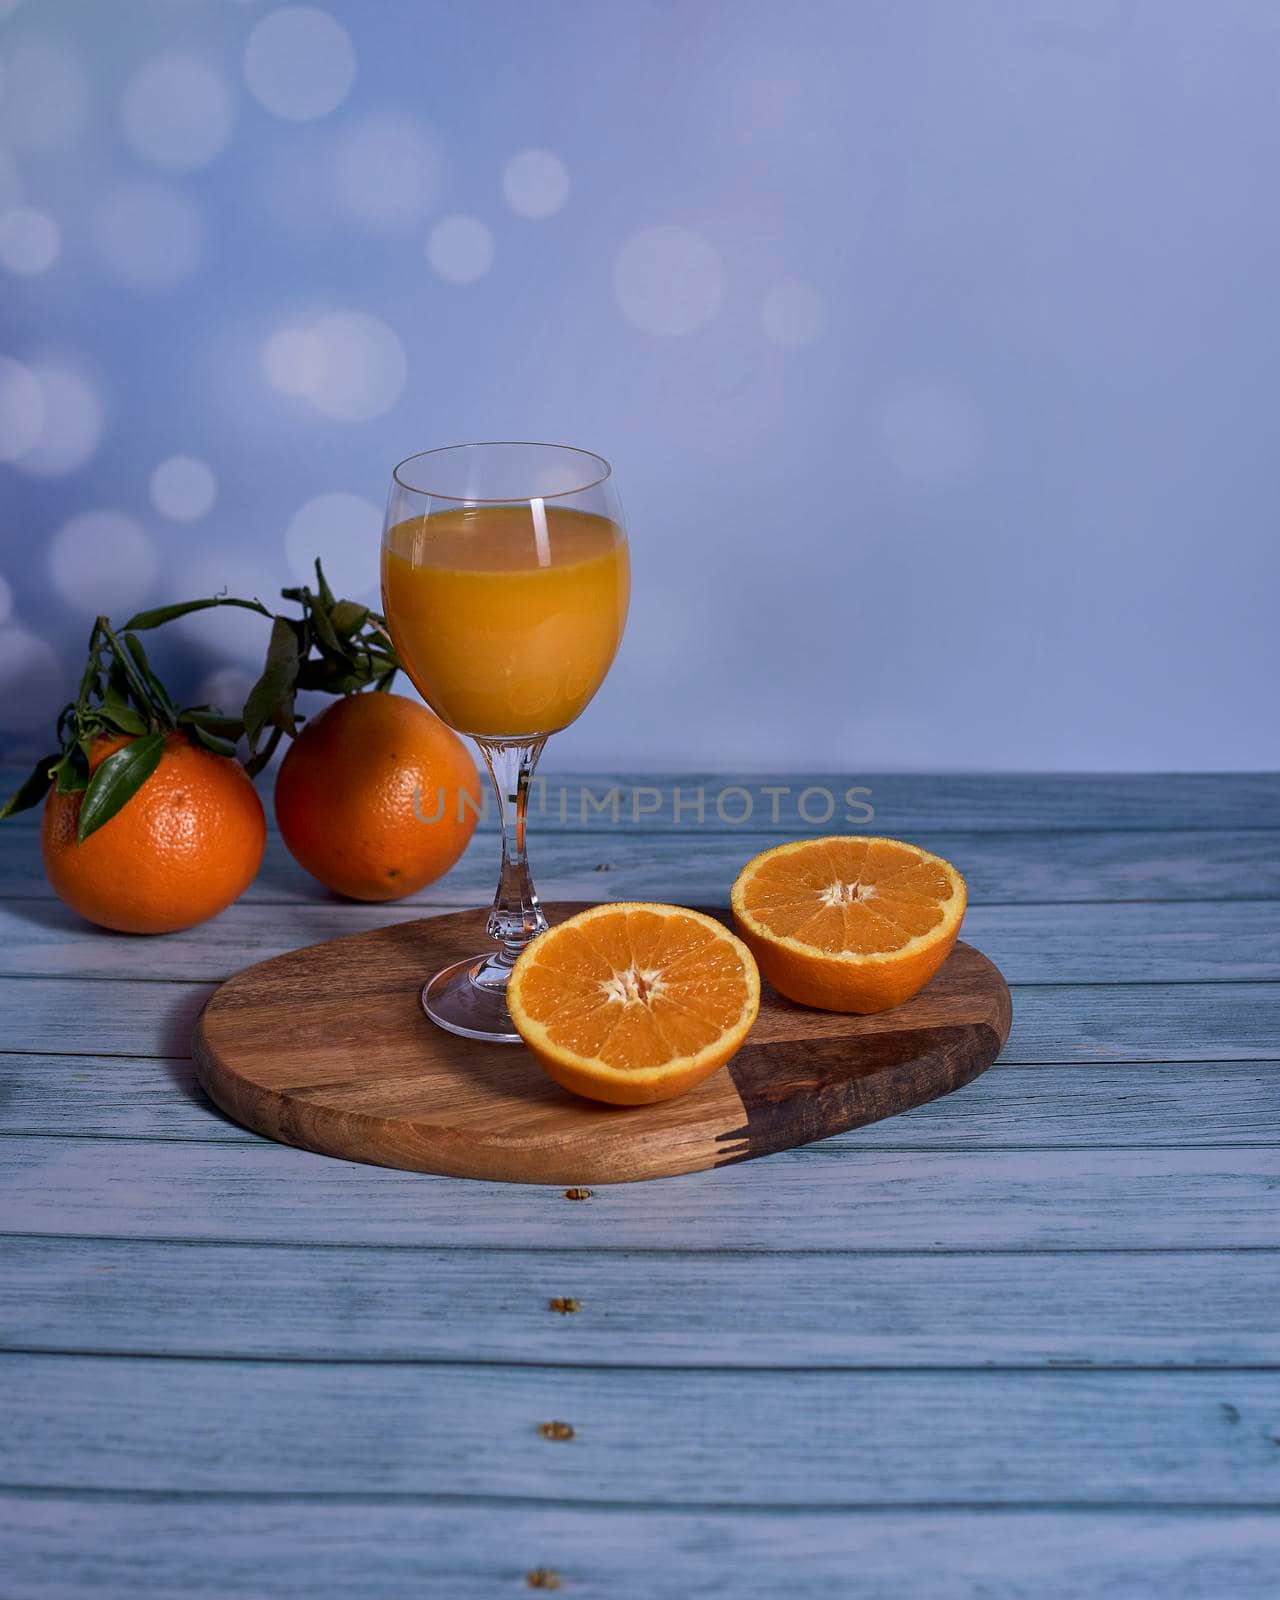 Glass of orange juice on wooden table, half orange and whole oranges, wooden floor, bright sound